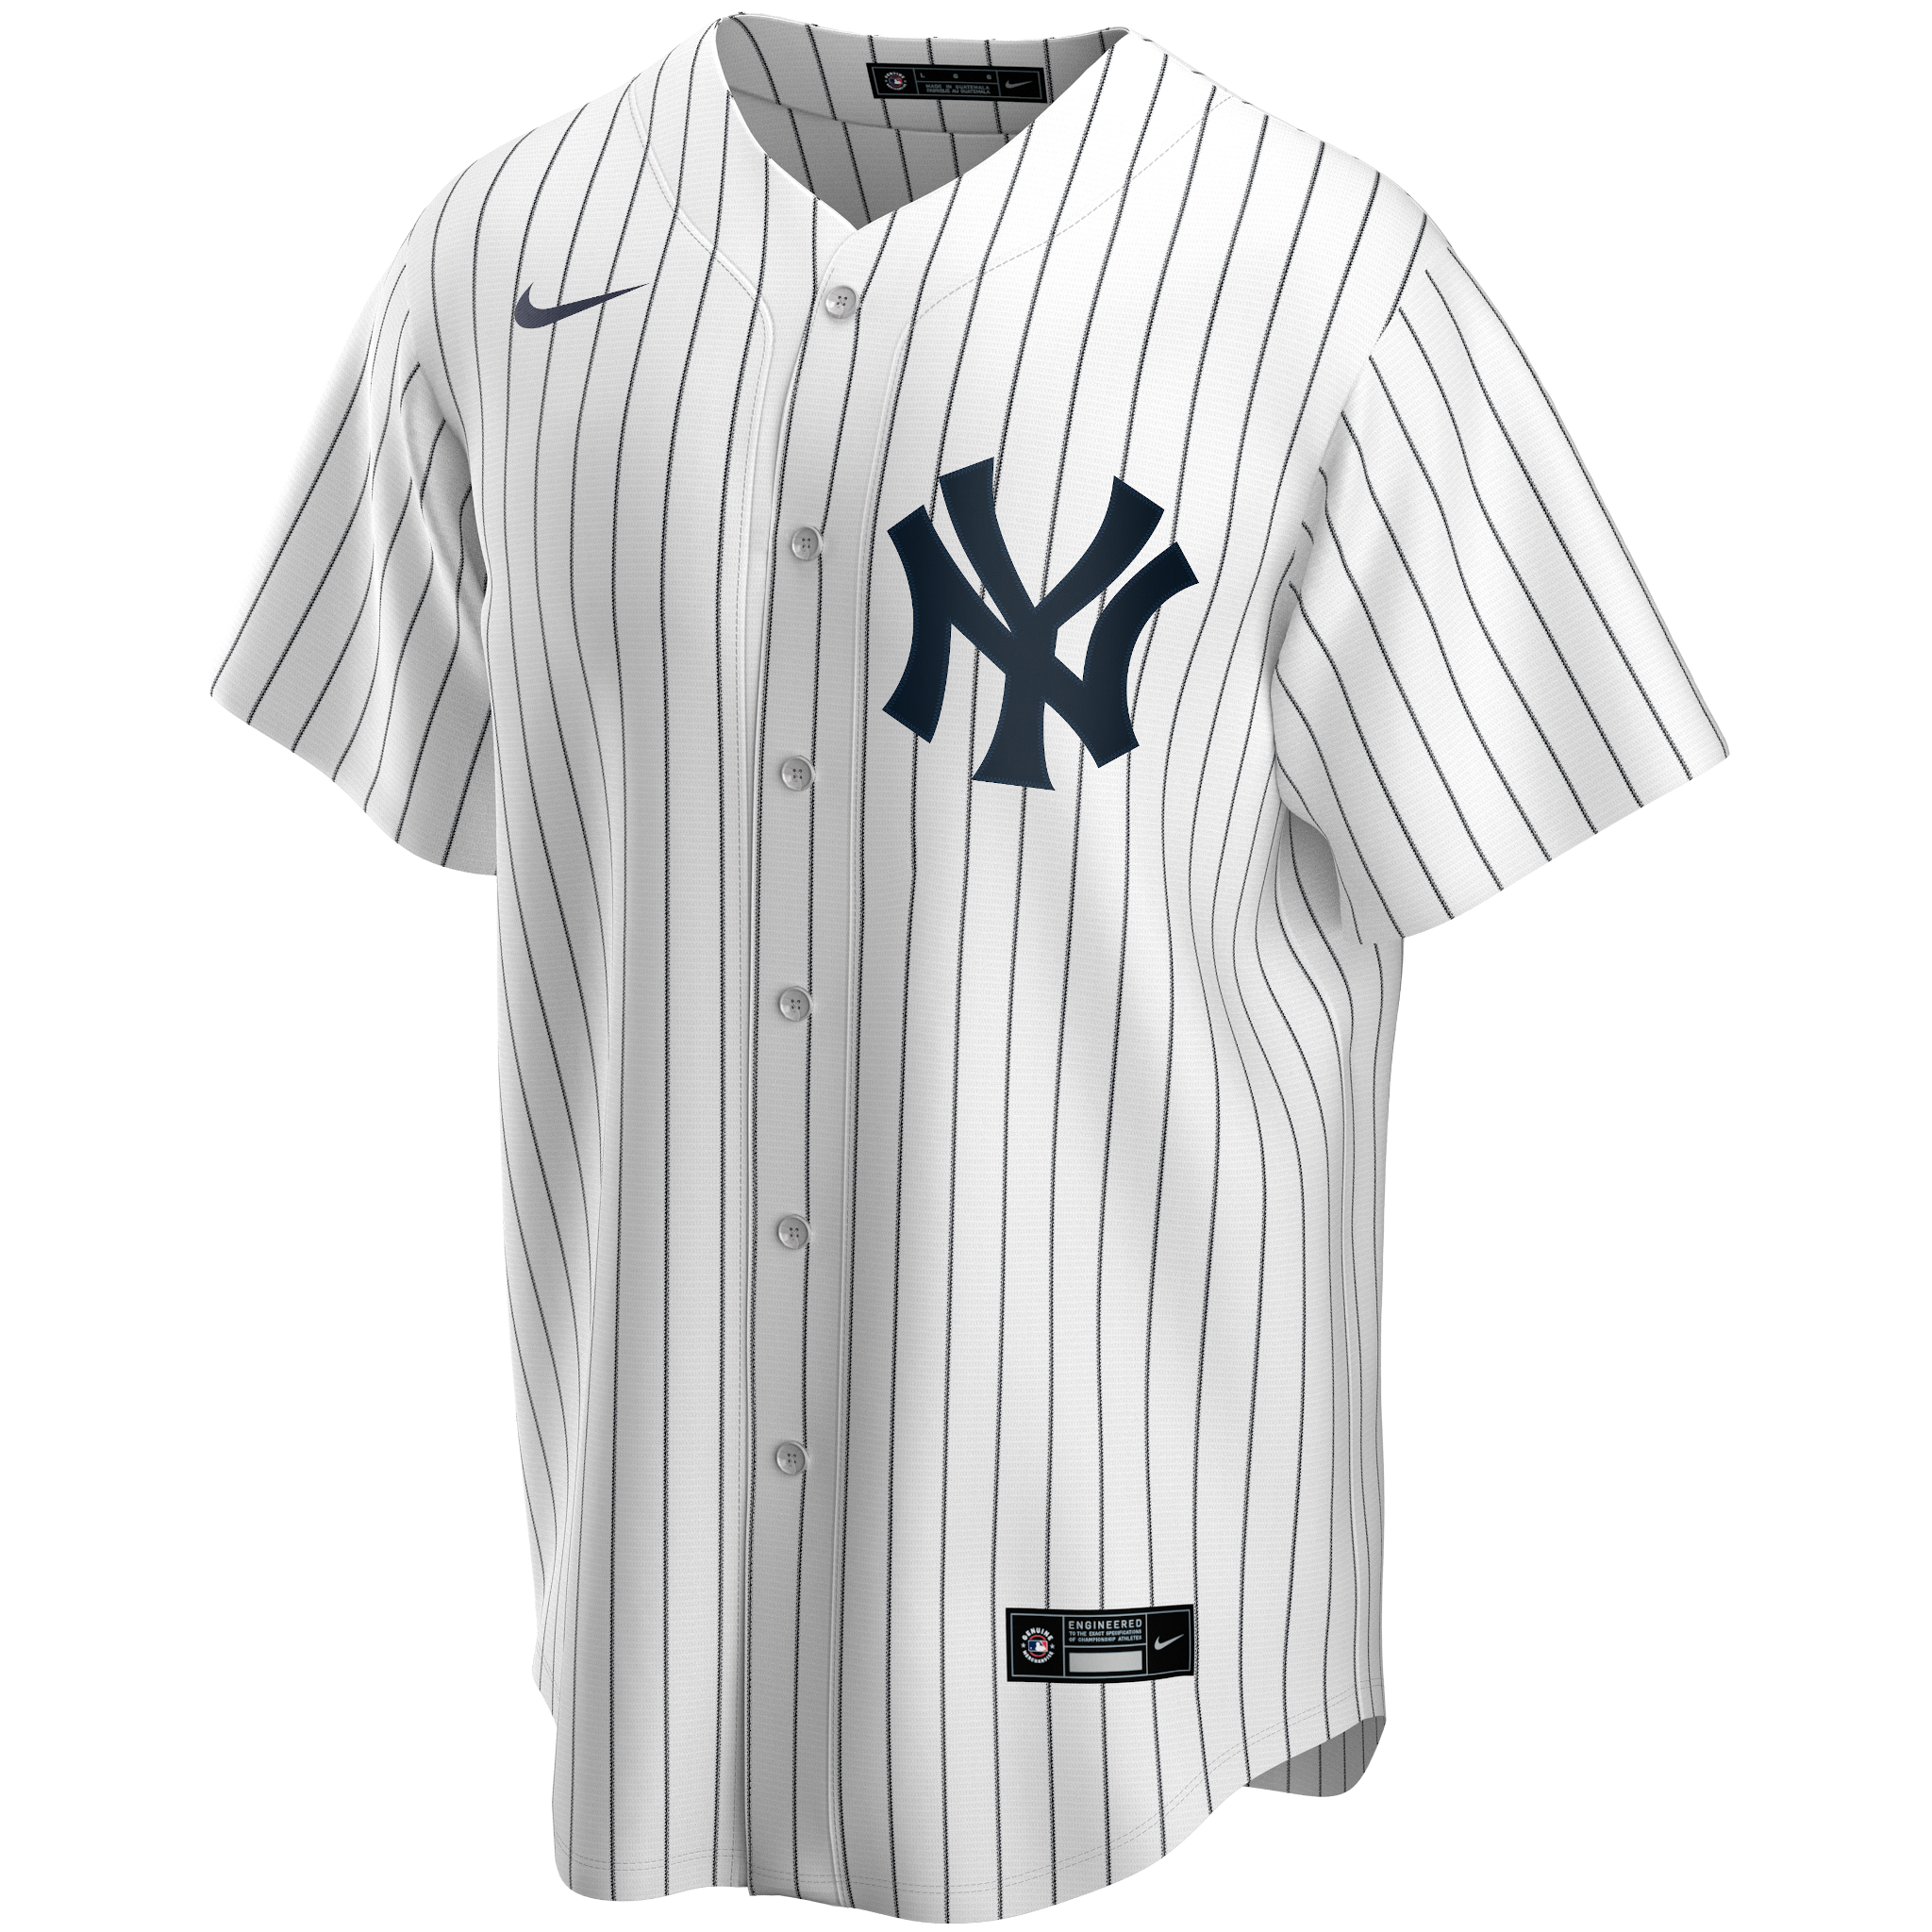 Tino Martinez Signed New York Yankees Jersey (PSA COA) 4xWorld